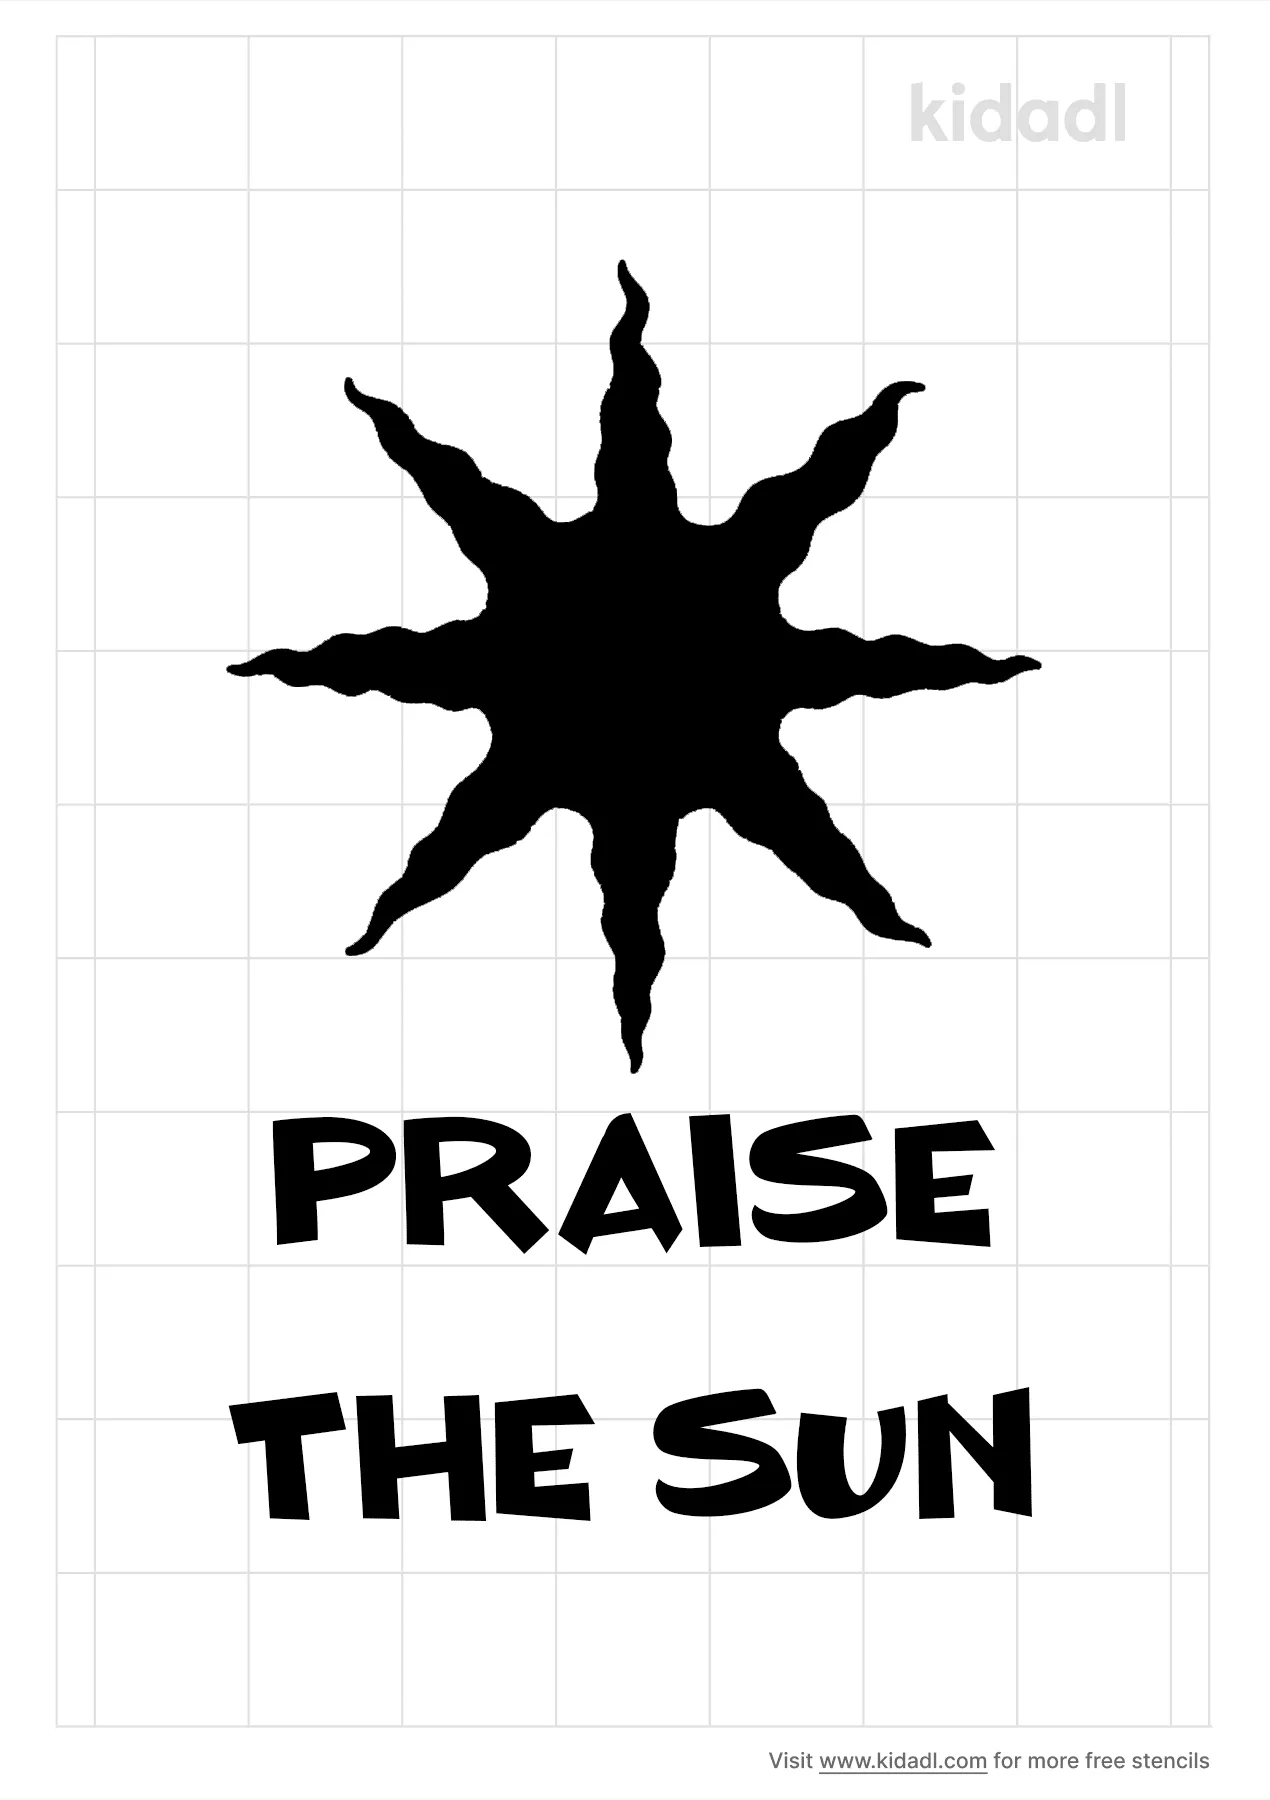 Praise The Sun Stencils Free Printable Words Quotes Stencils Kidadl And Words Quotes Stencils Free Printable Stencils Kidadl